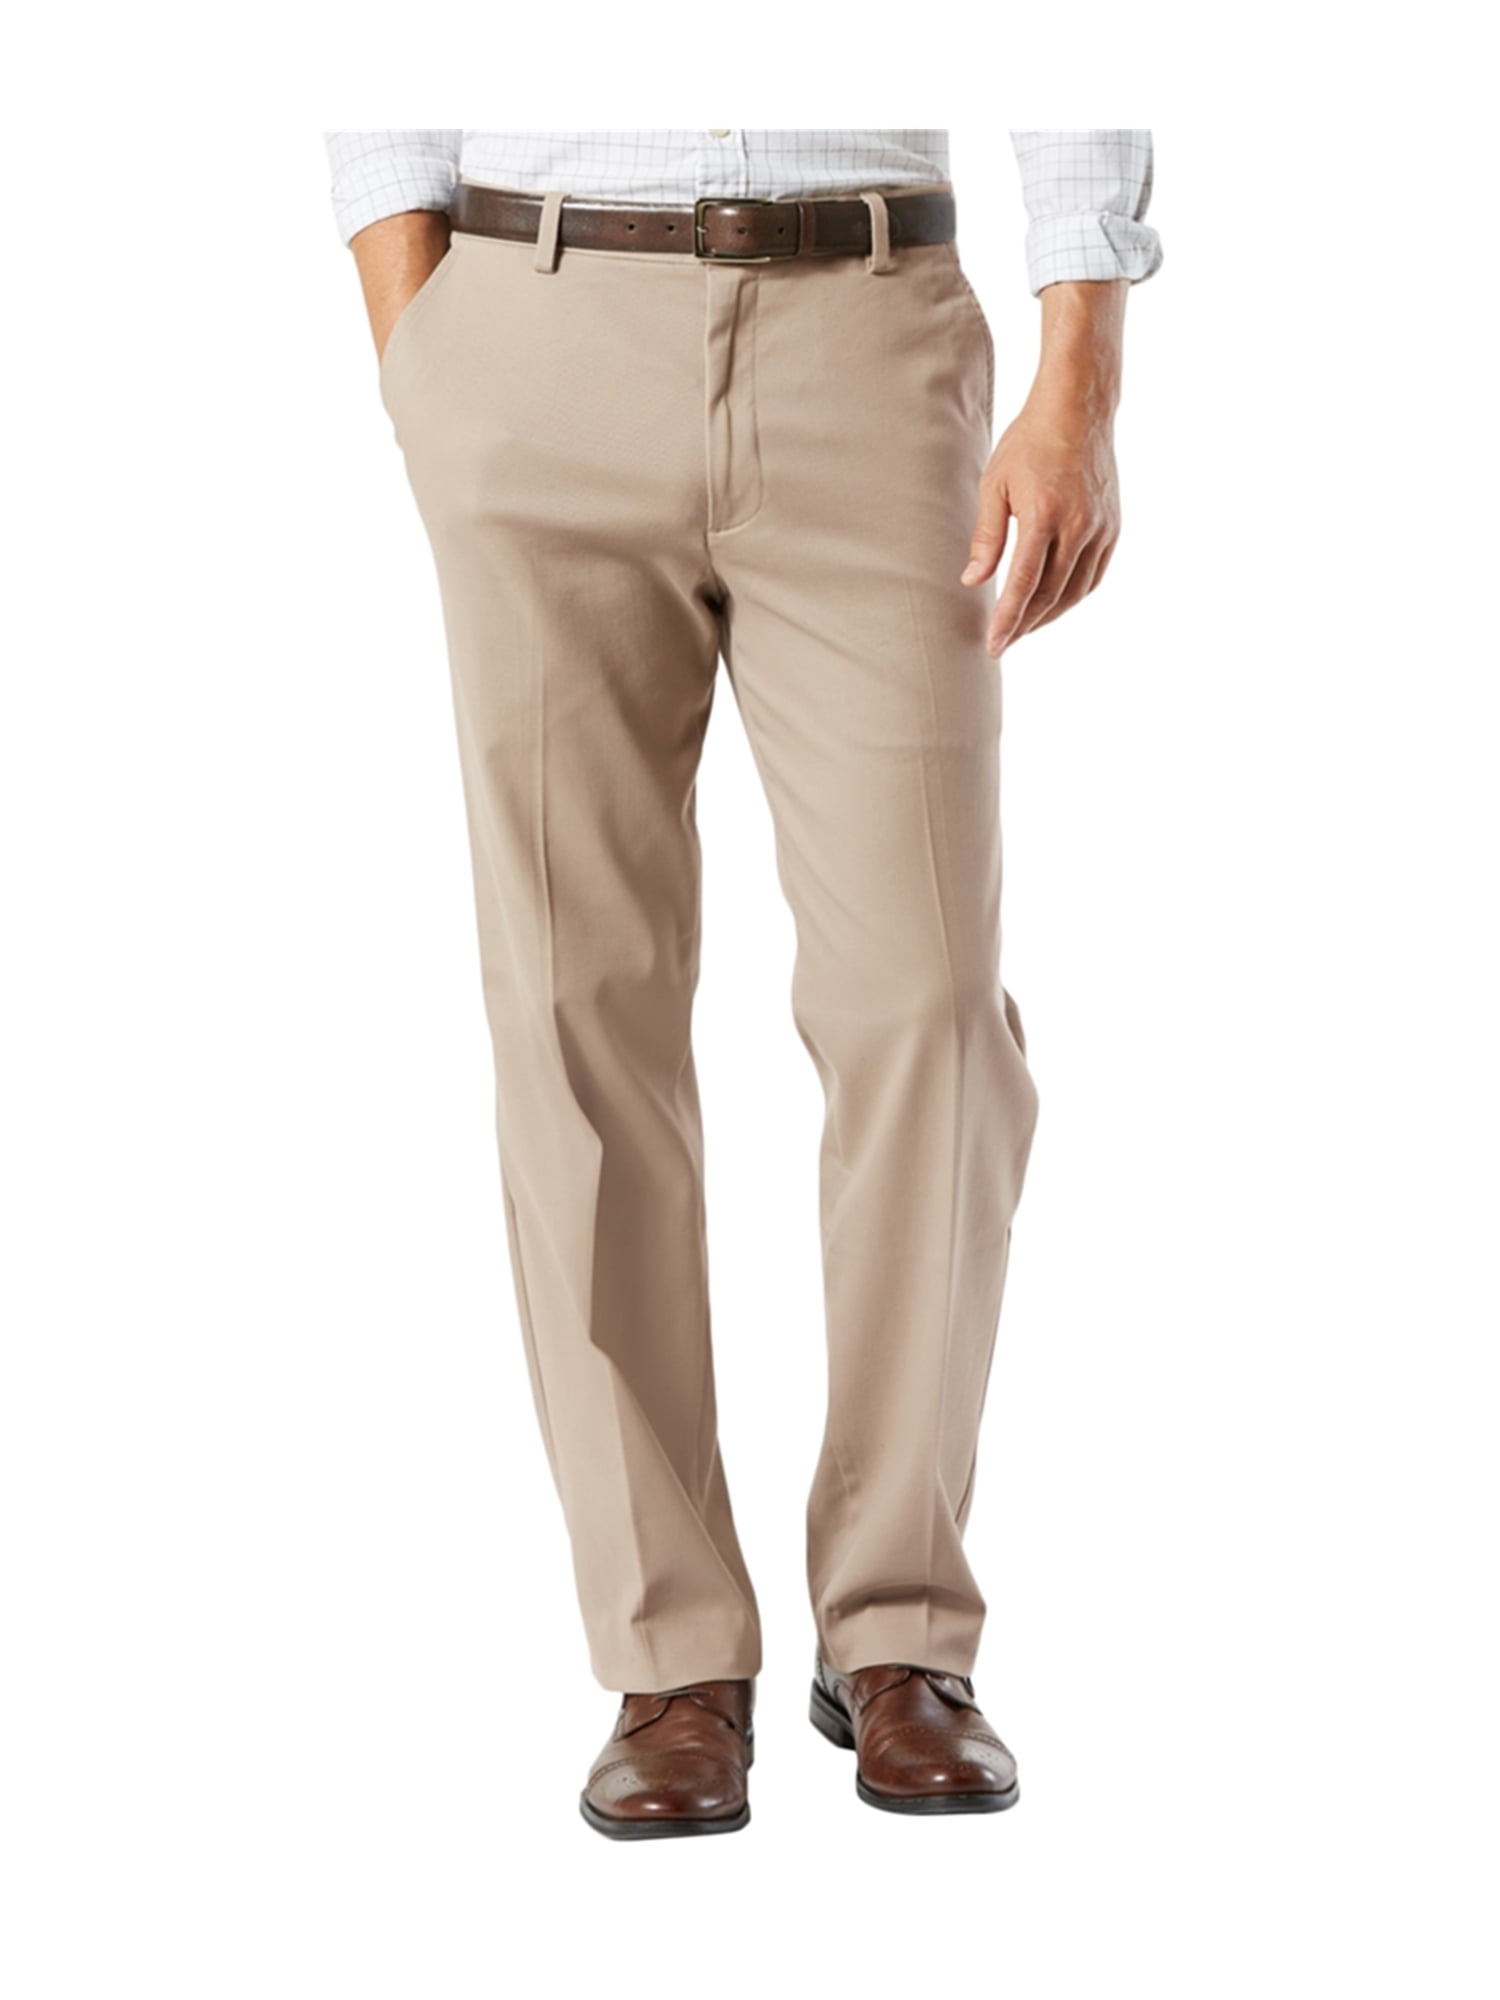 Dockers Mens Khakis Casual Trousers beige 42x30 | Walmart Canada